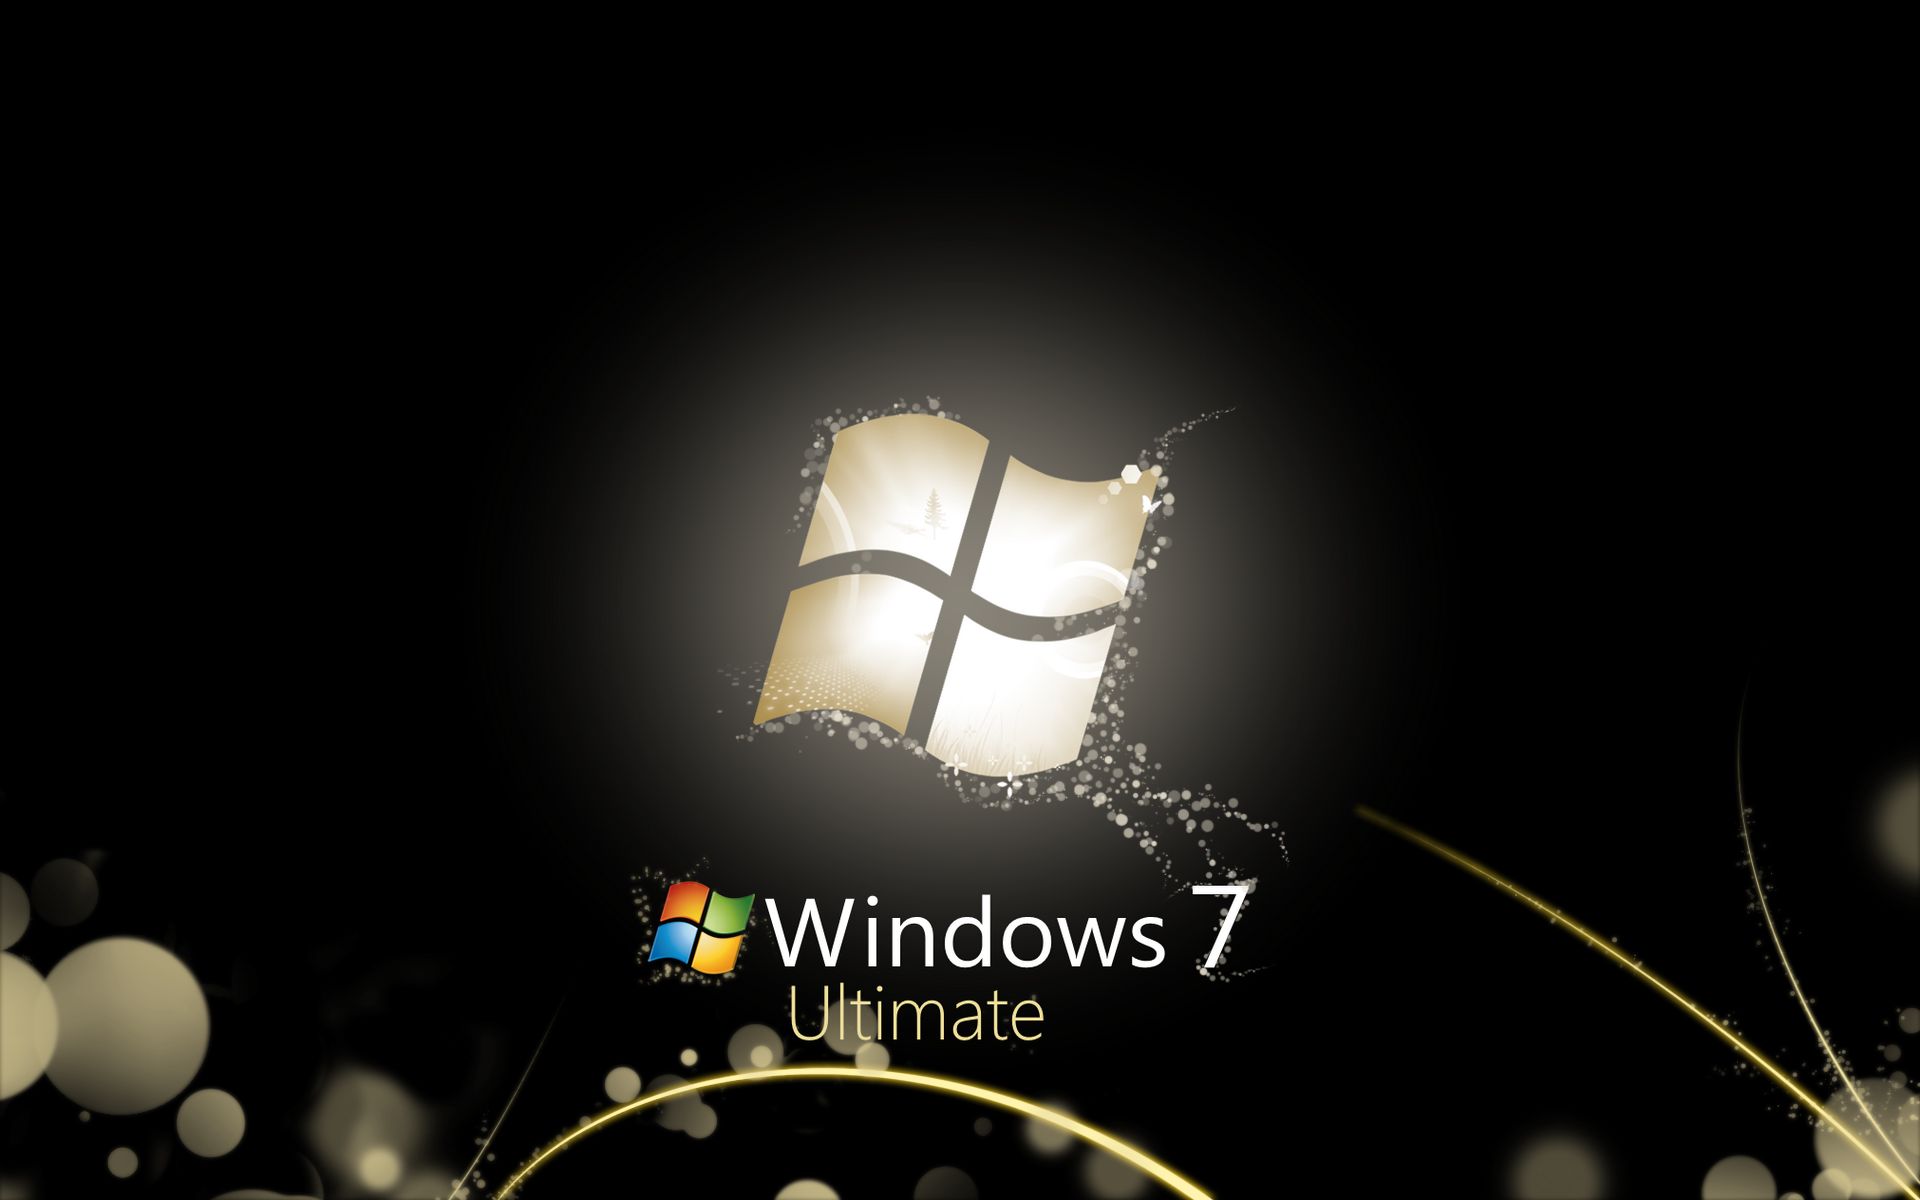 windows ultimate, windows 7 ultimate, technology, microsoft, windows 7, windows